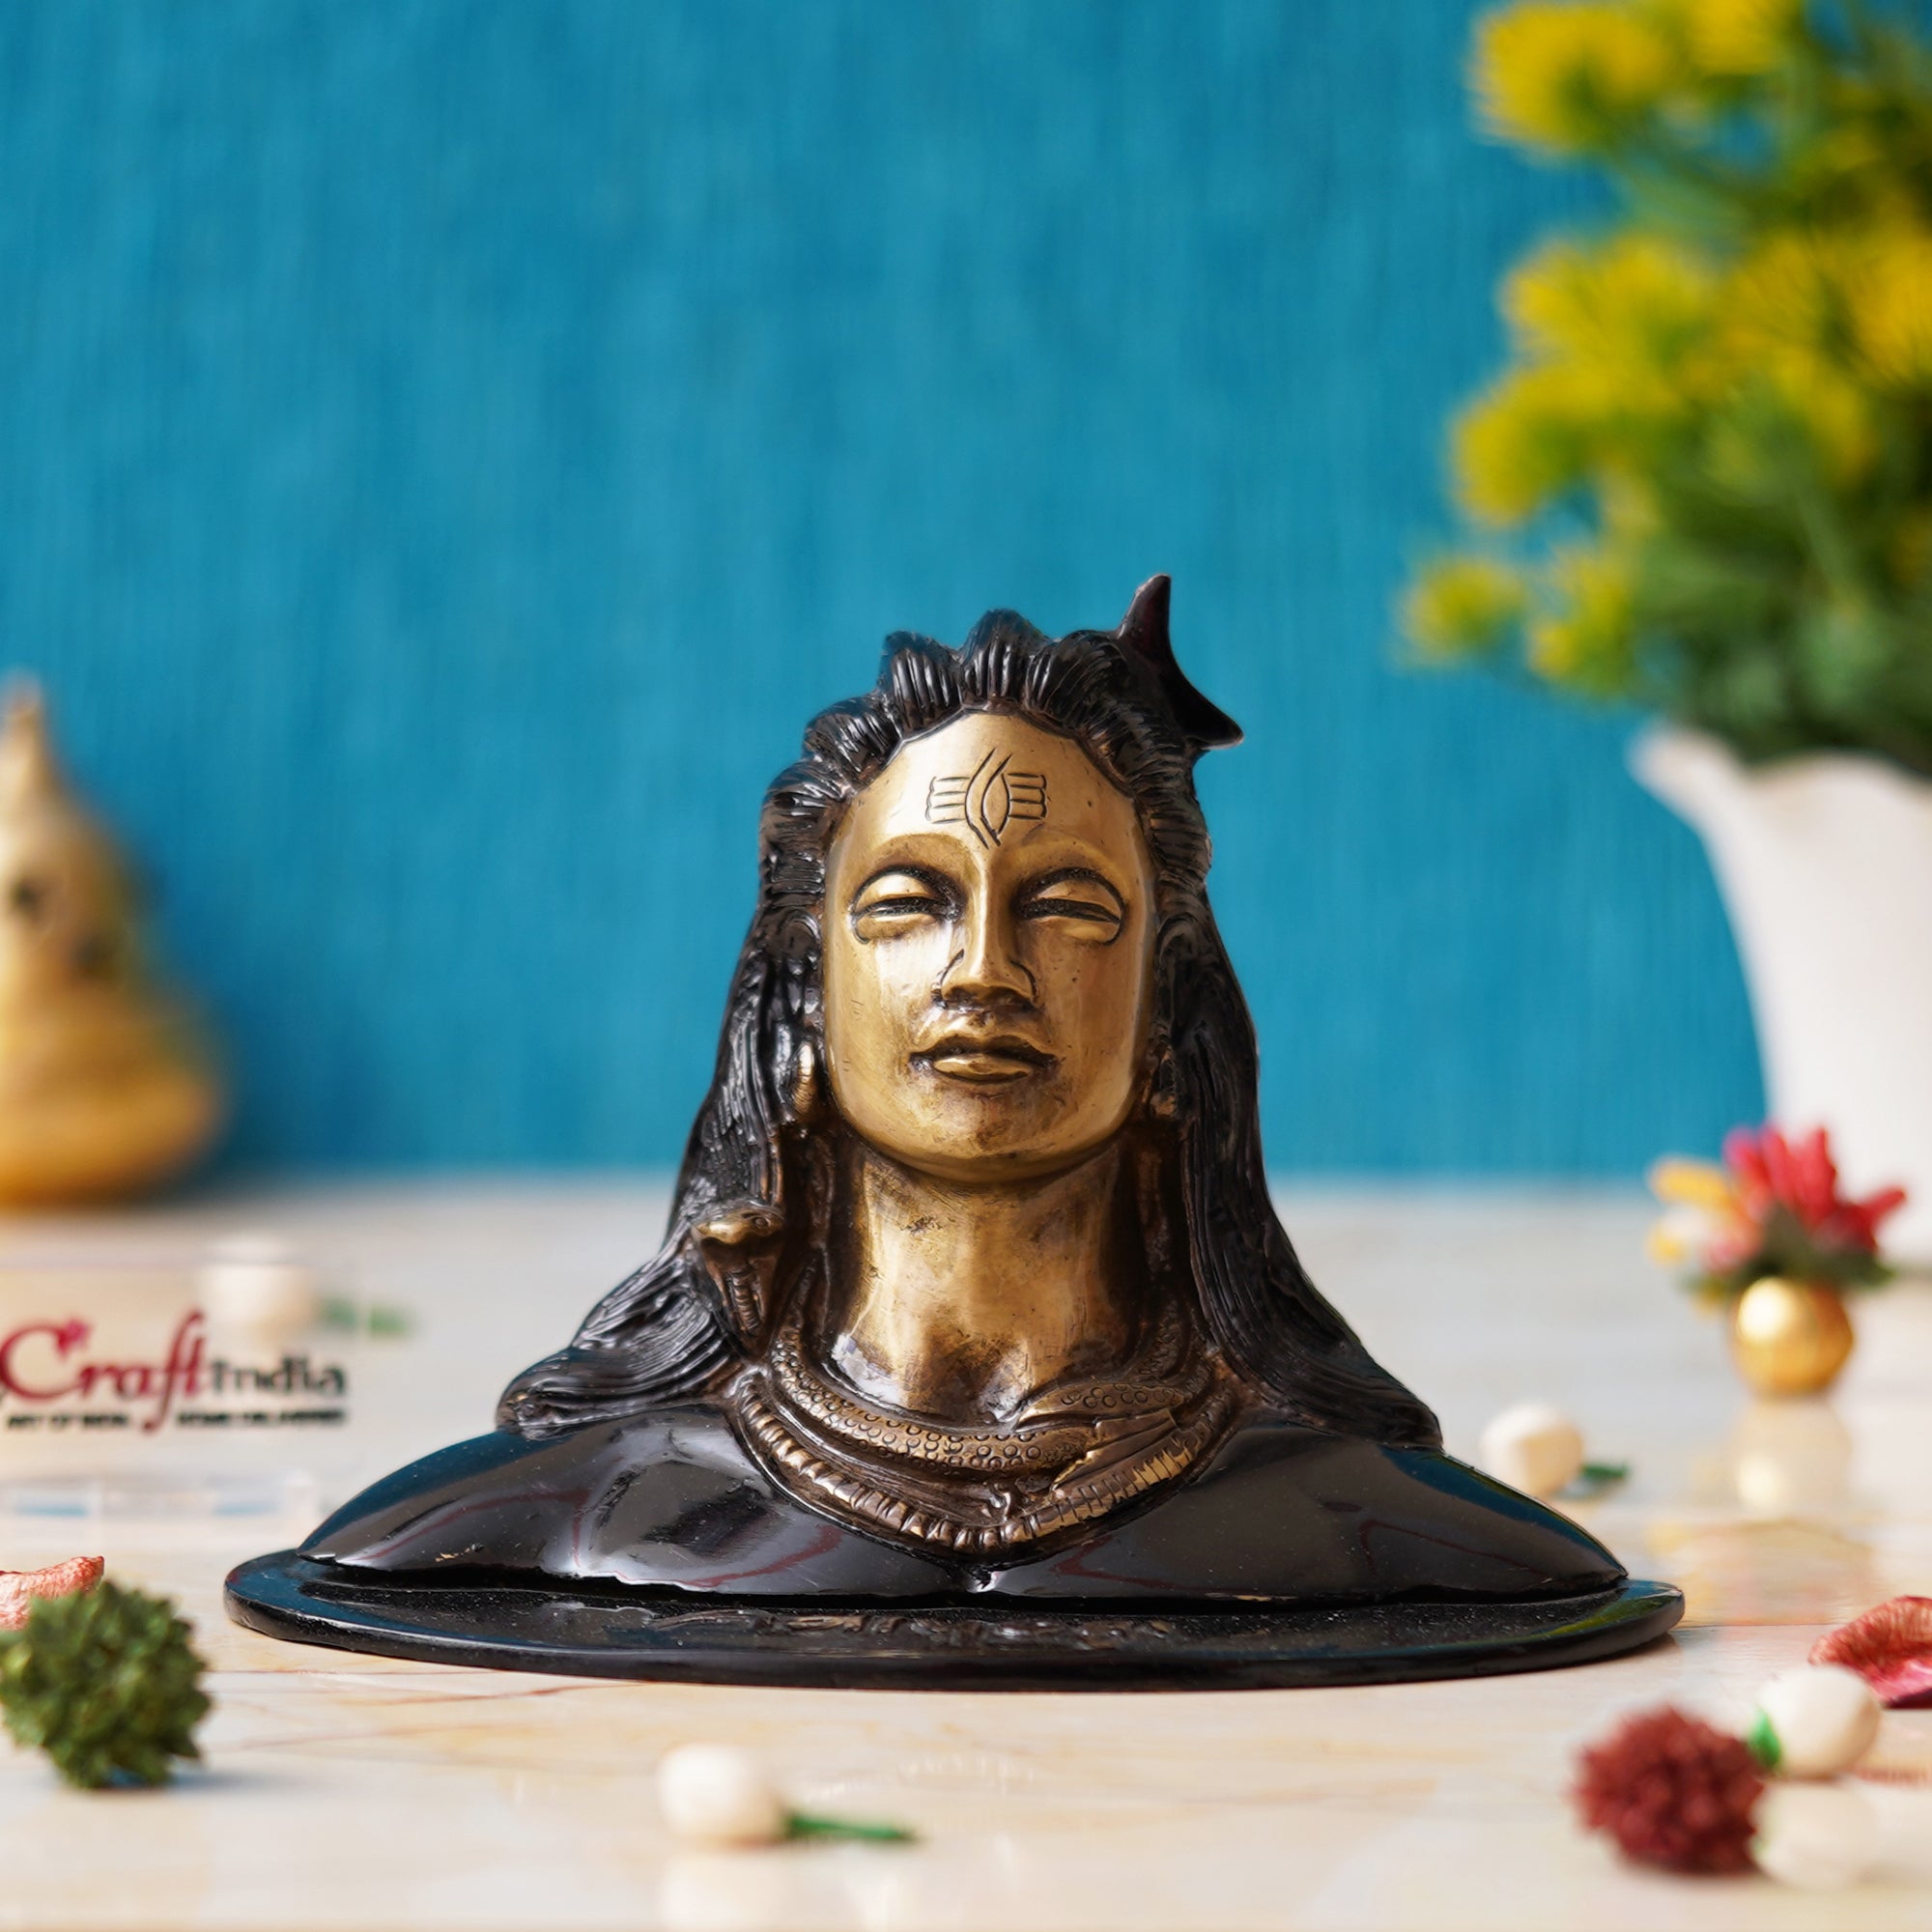 Black and Golden Brass Lord Adiyogi Shiva Statue, Shiv Murti, Shiva Idol for Car Dashboard, Home Office Decoration - Gift for Maha Shivratri Festival 4